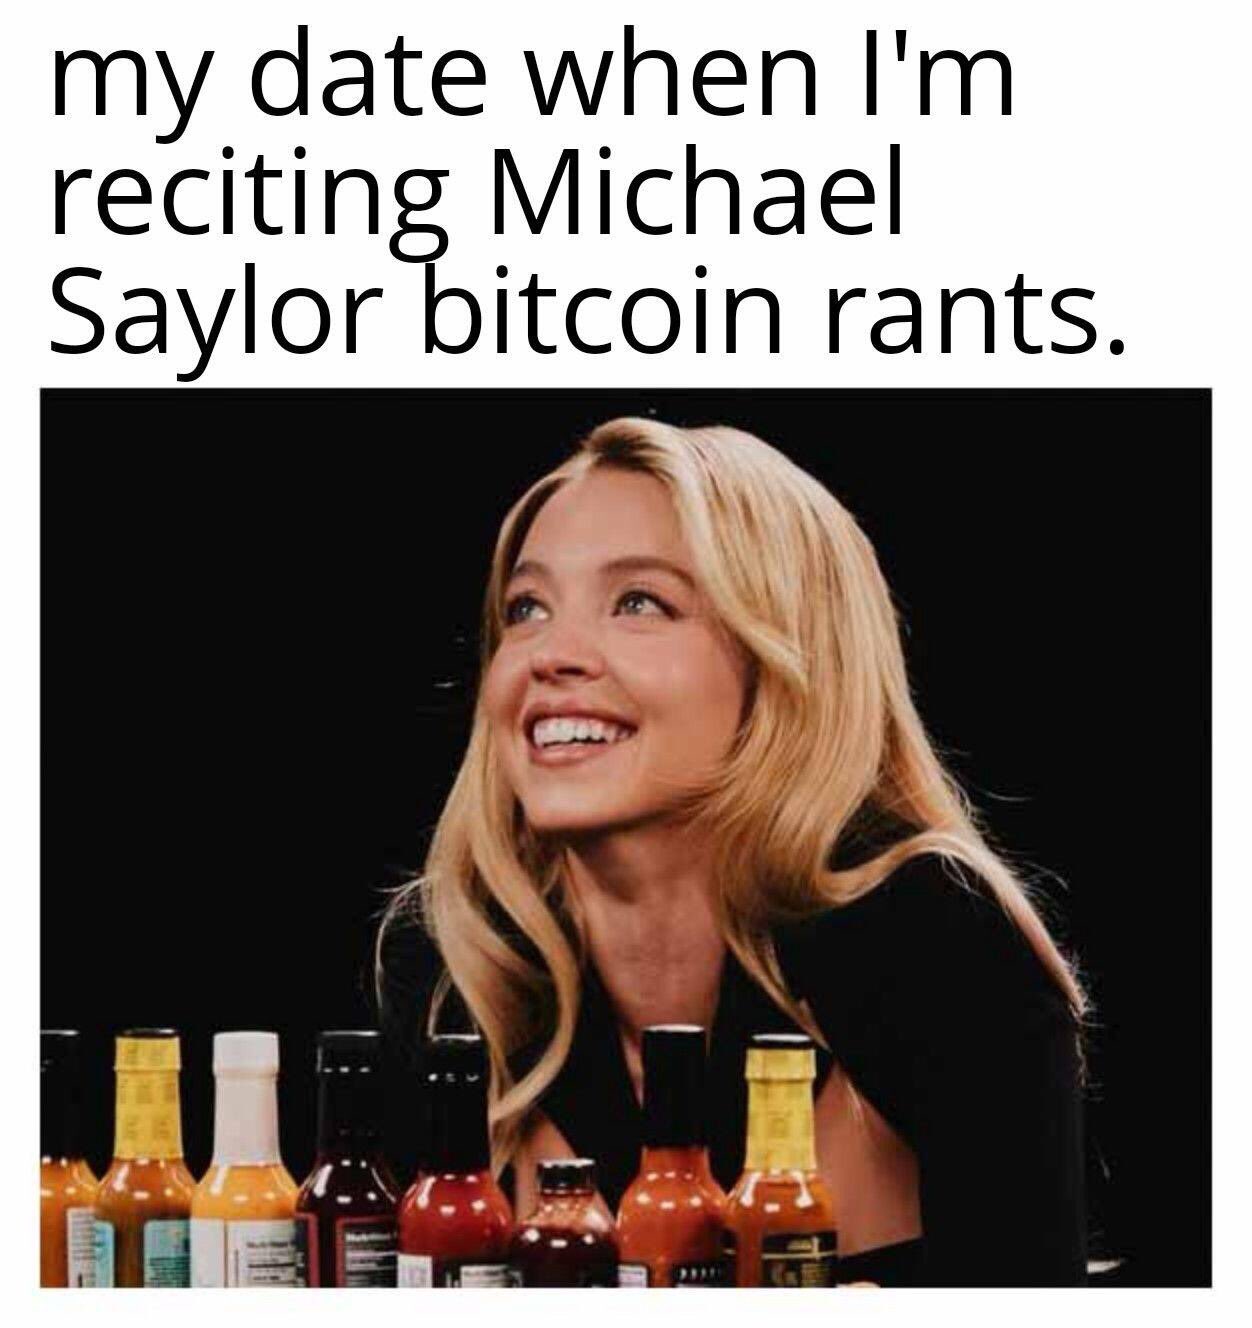 my date when I'm
reciting Michael
Saylor bitcoin rants.